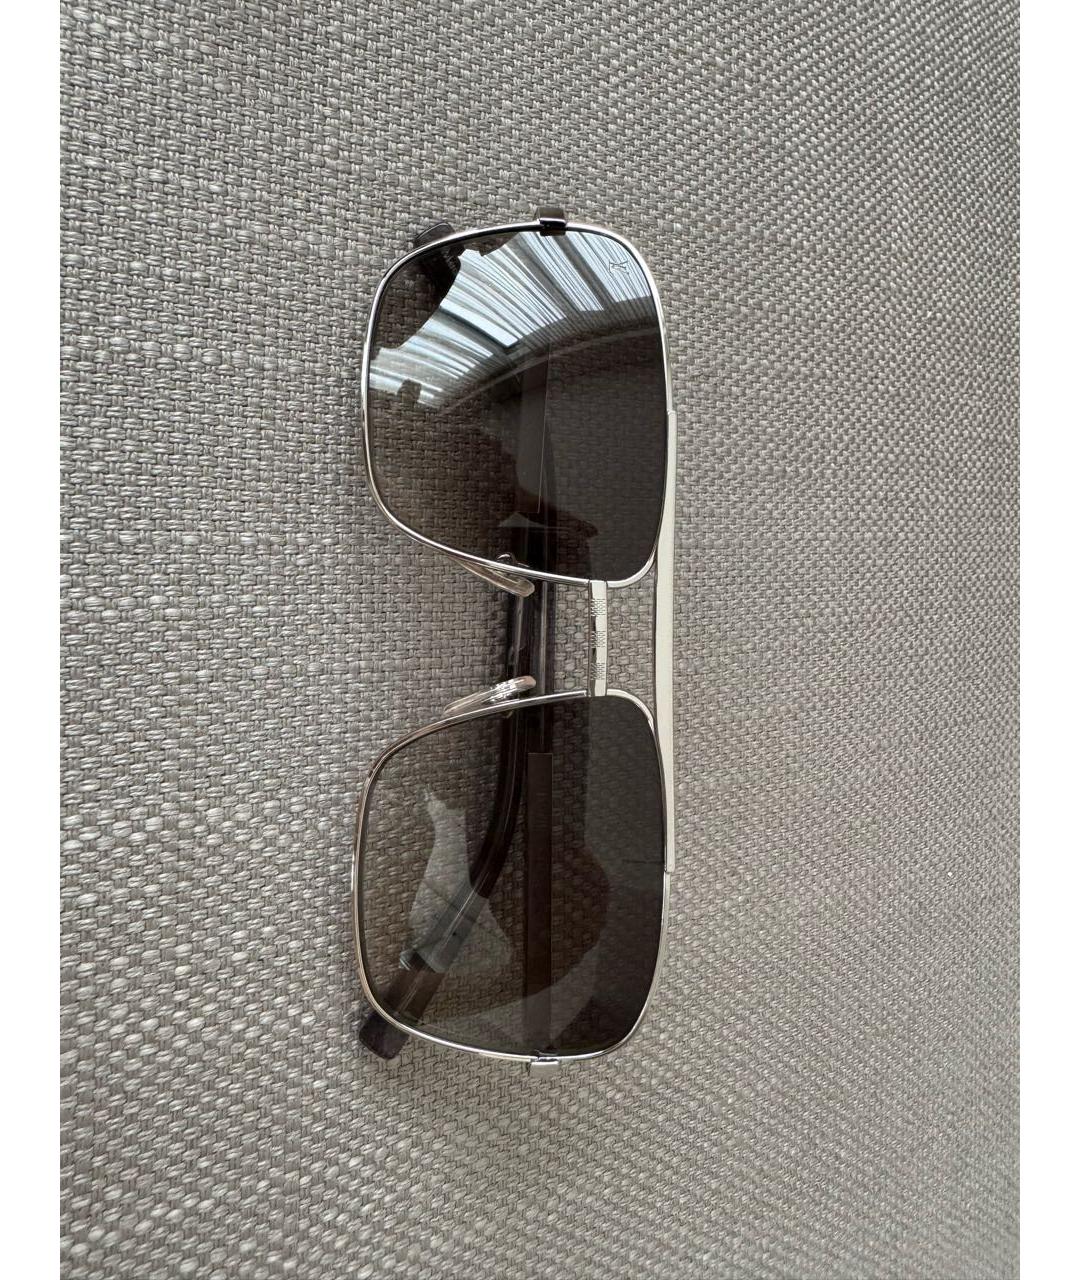 LOUIS VUITTON Коричневые пластиковые солнцезащитные очки, фото 5